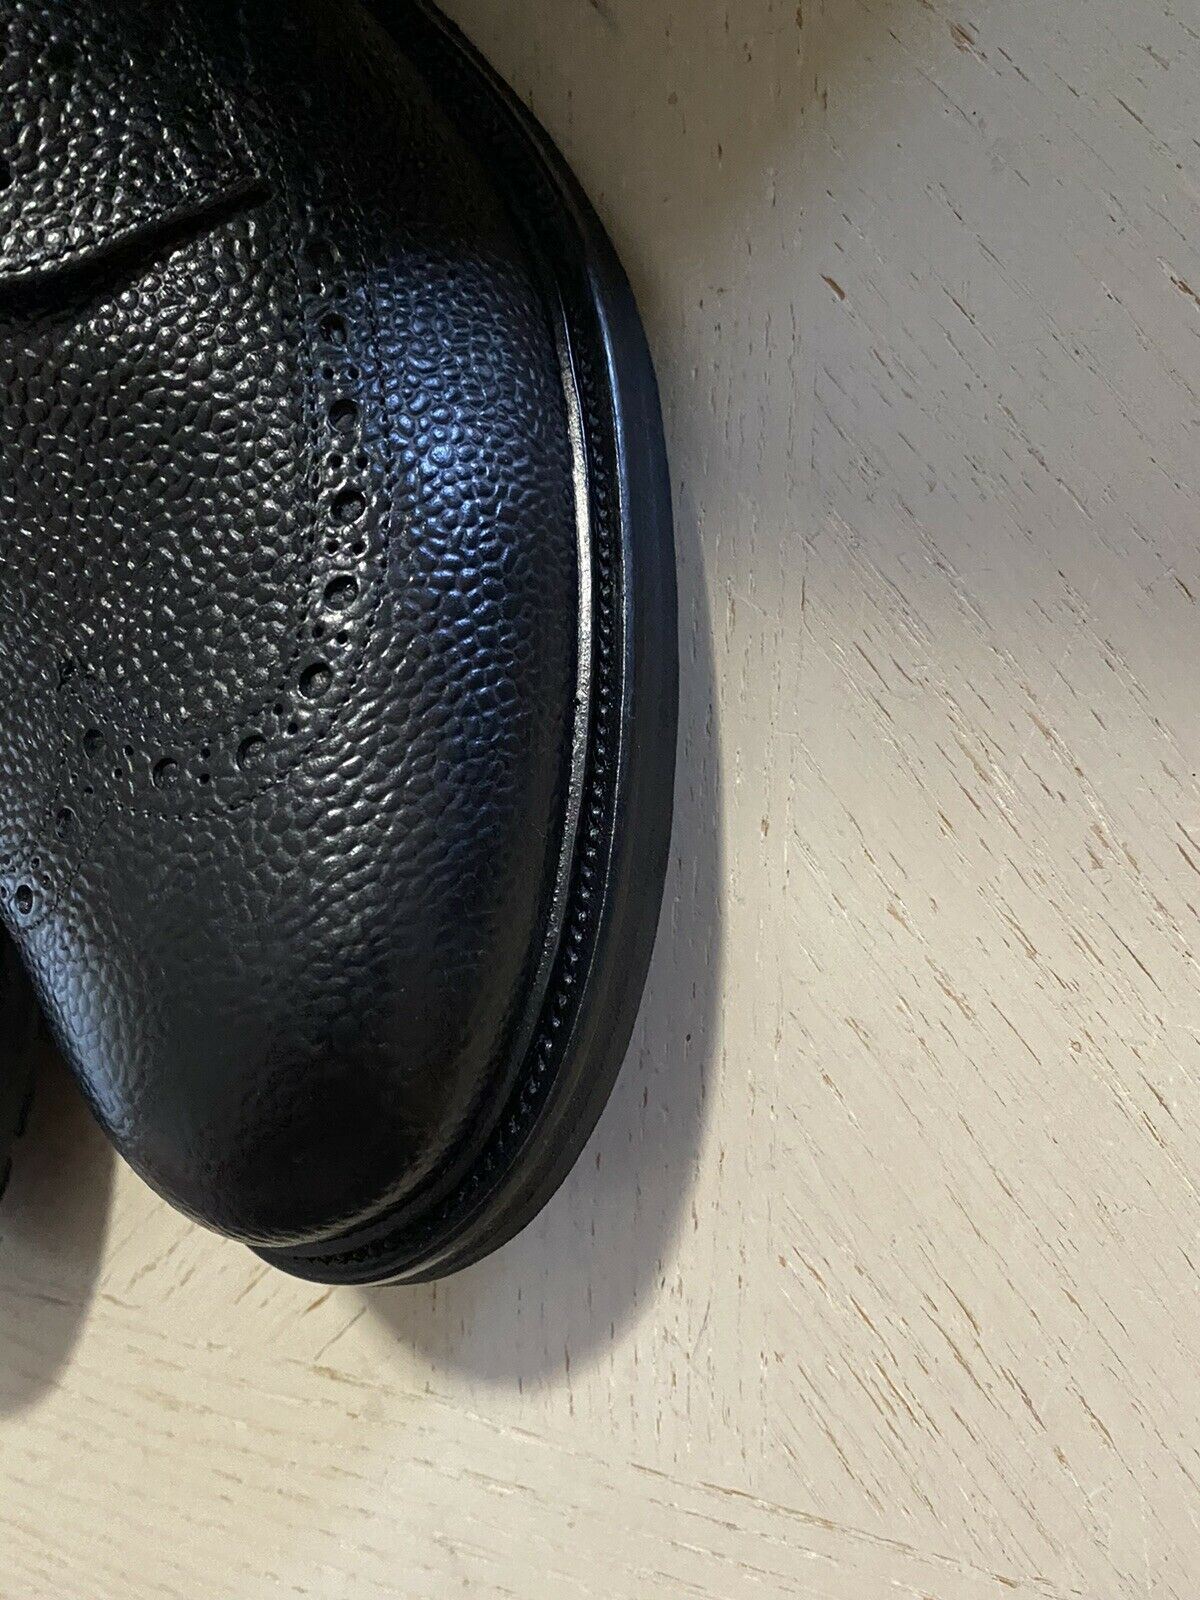 New $720 Roberto Cavalli Men’s Leather Boots Shoes Black 12 US/45 Eu Italy